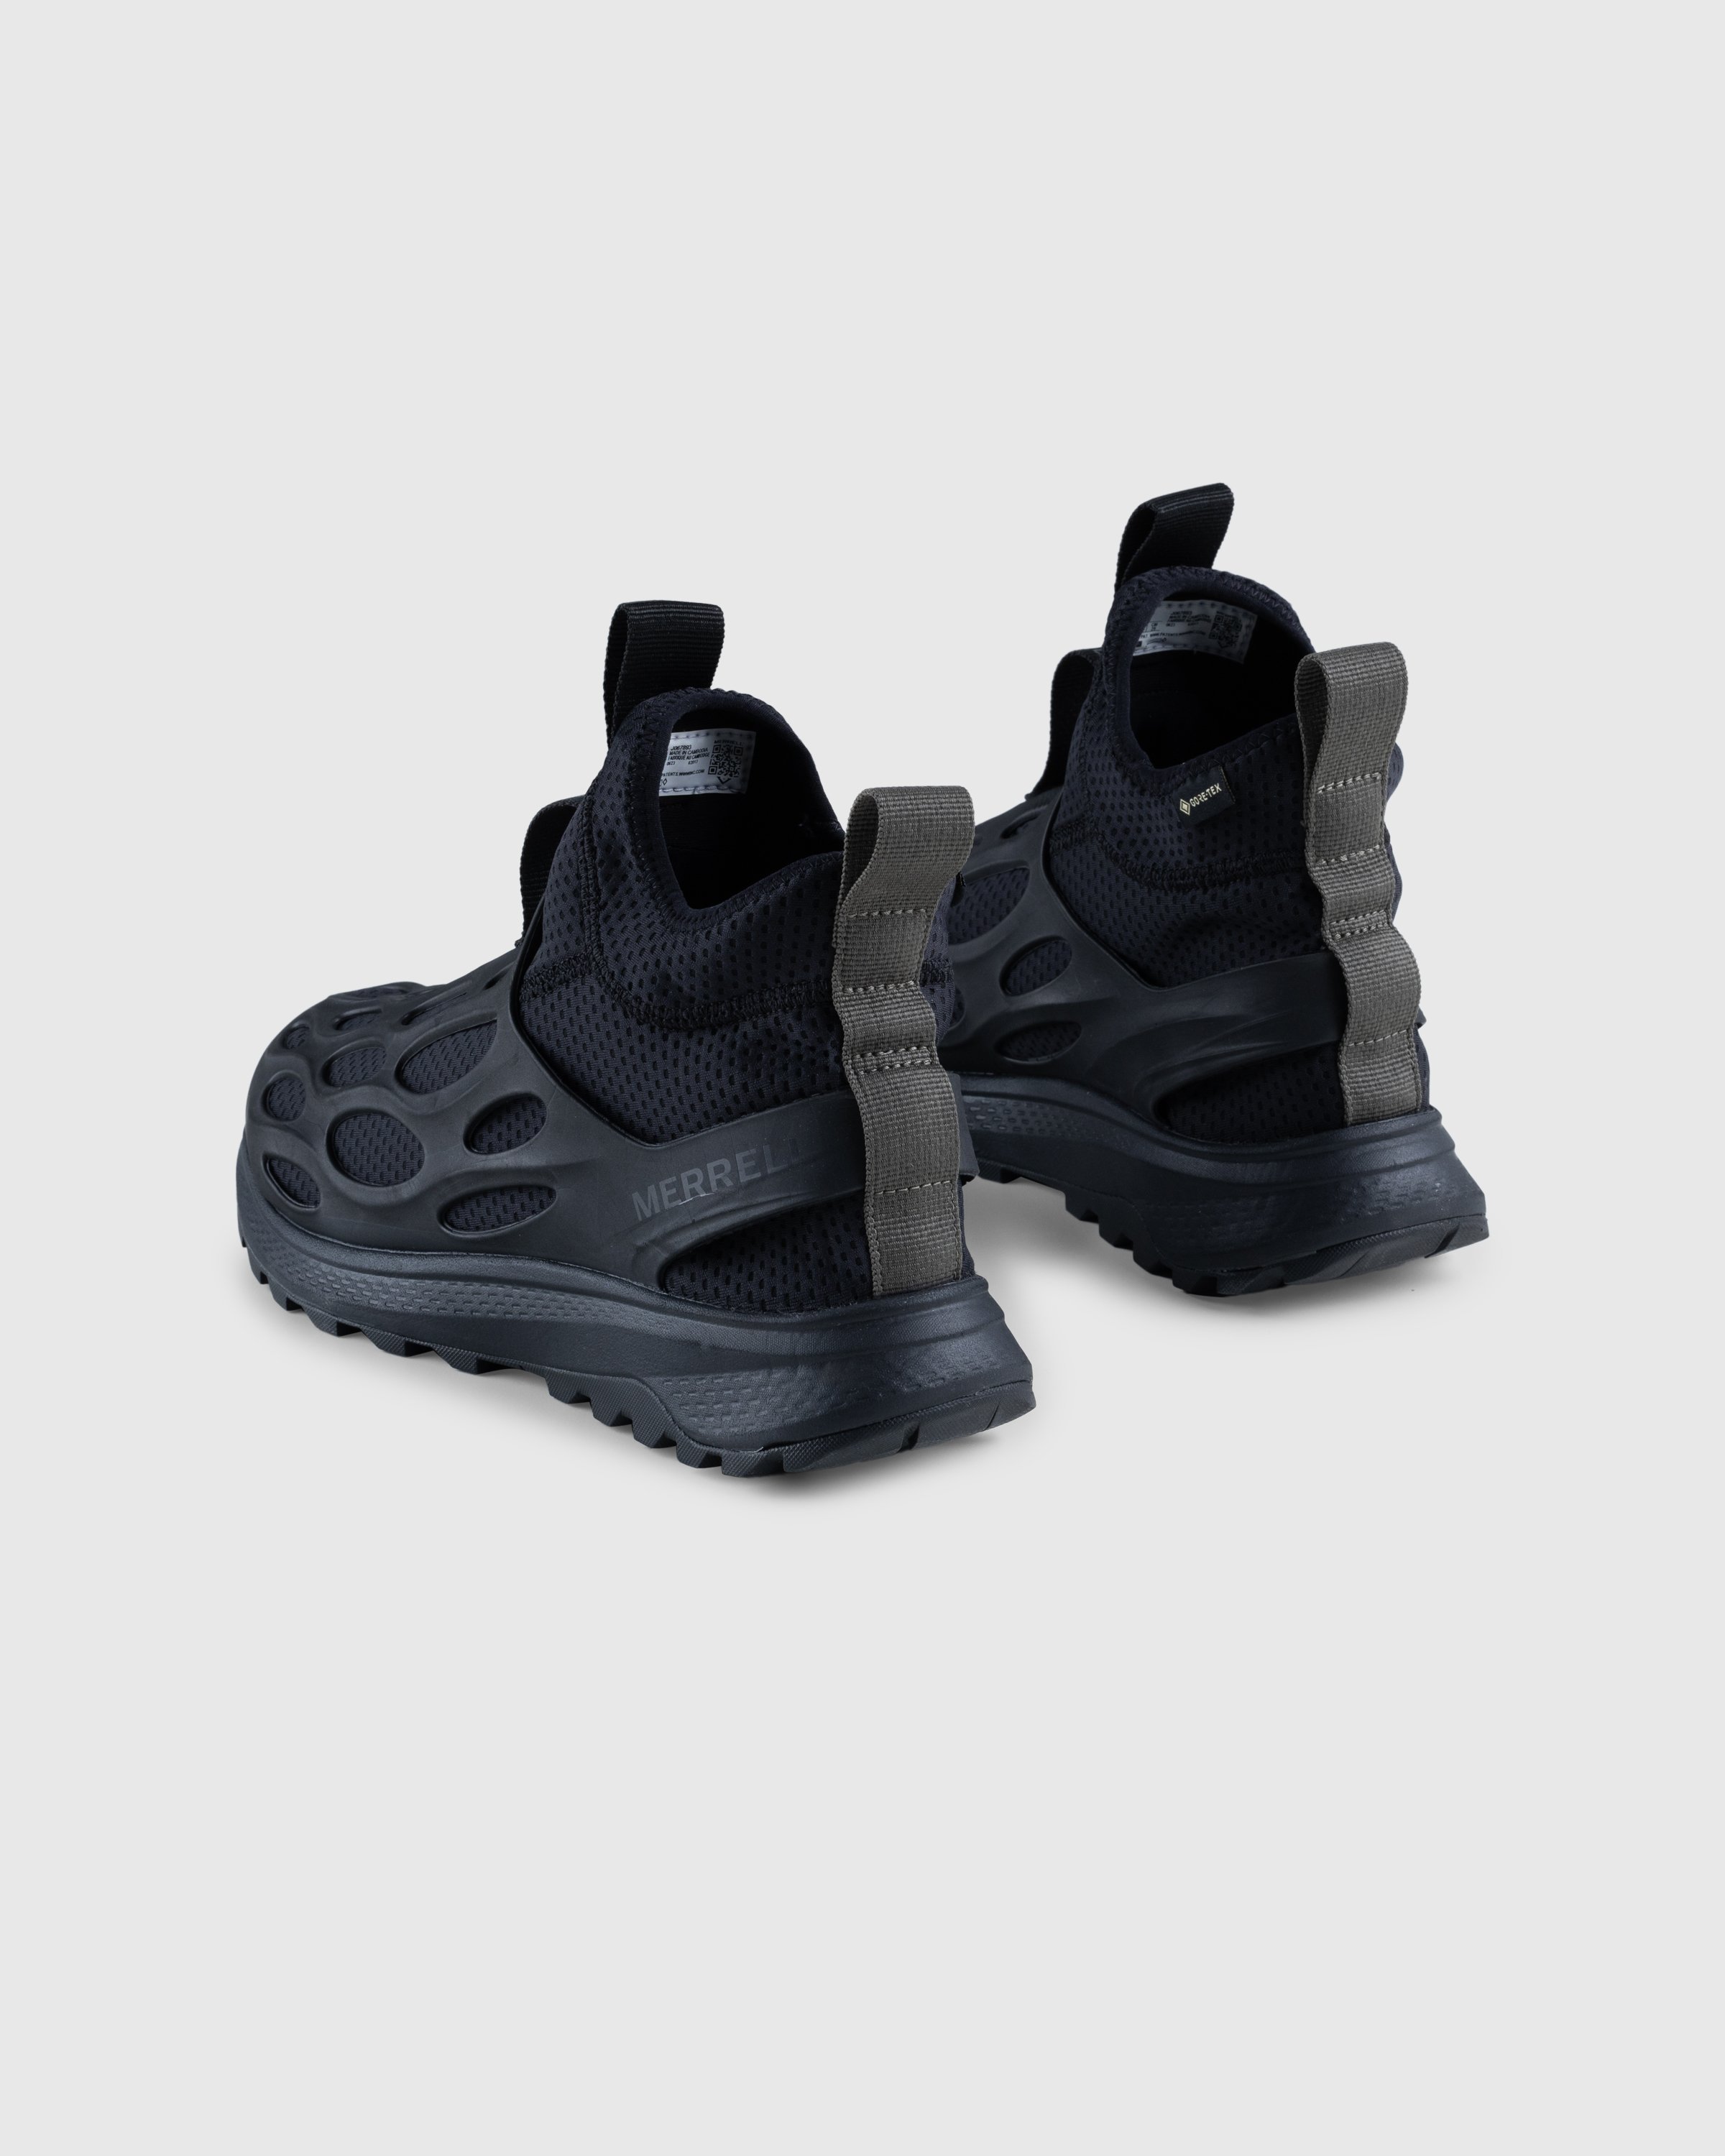 Merrell - Hydro Runner Mid GORE-TEX Black - Footwear - Black - Image 4